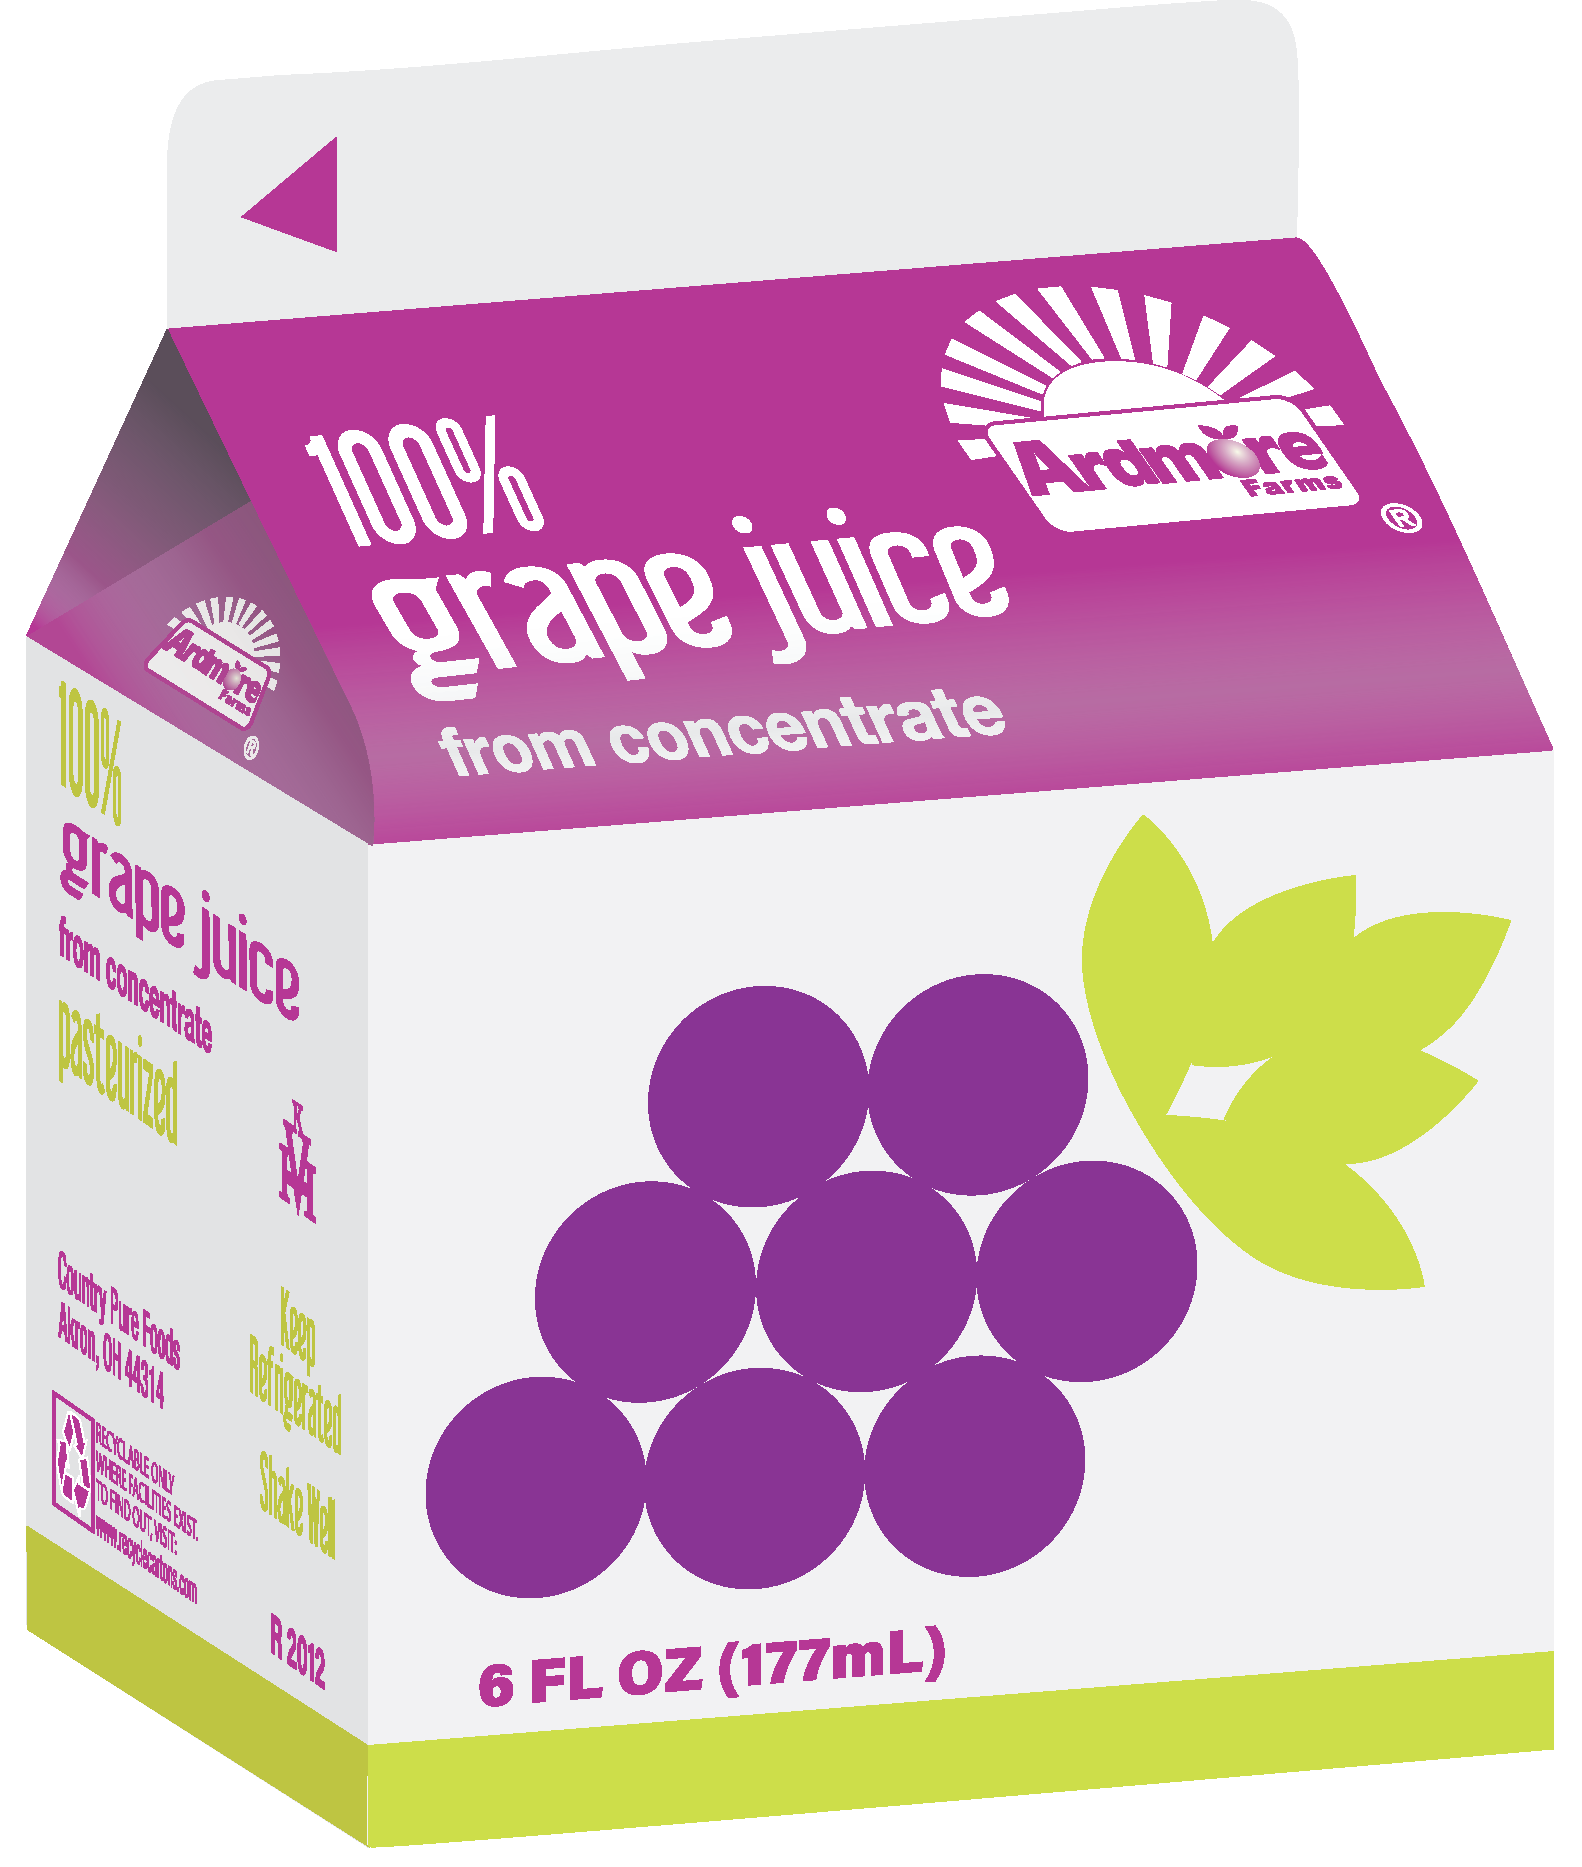 Ardmore Farms Grape Juice Chilled Carton